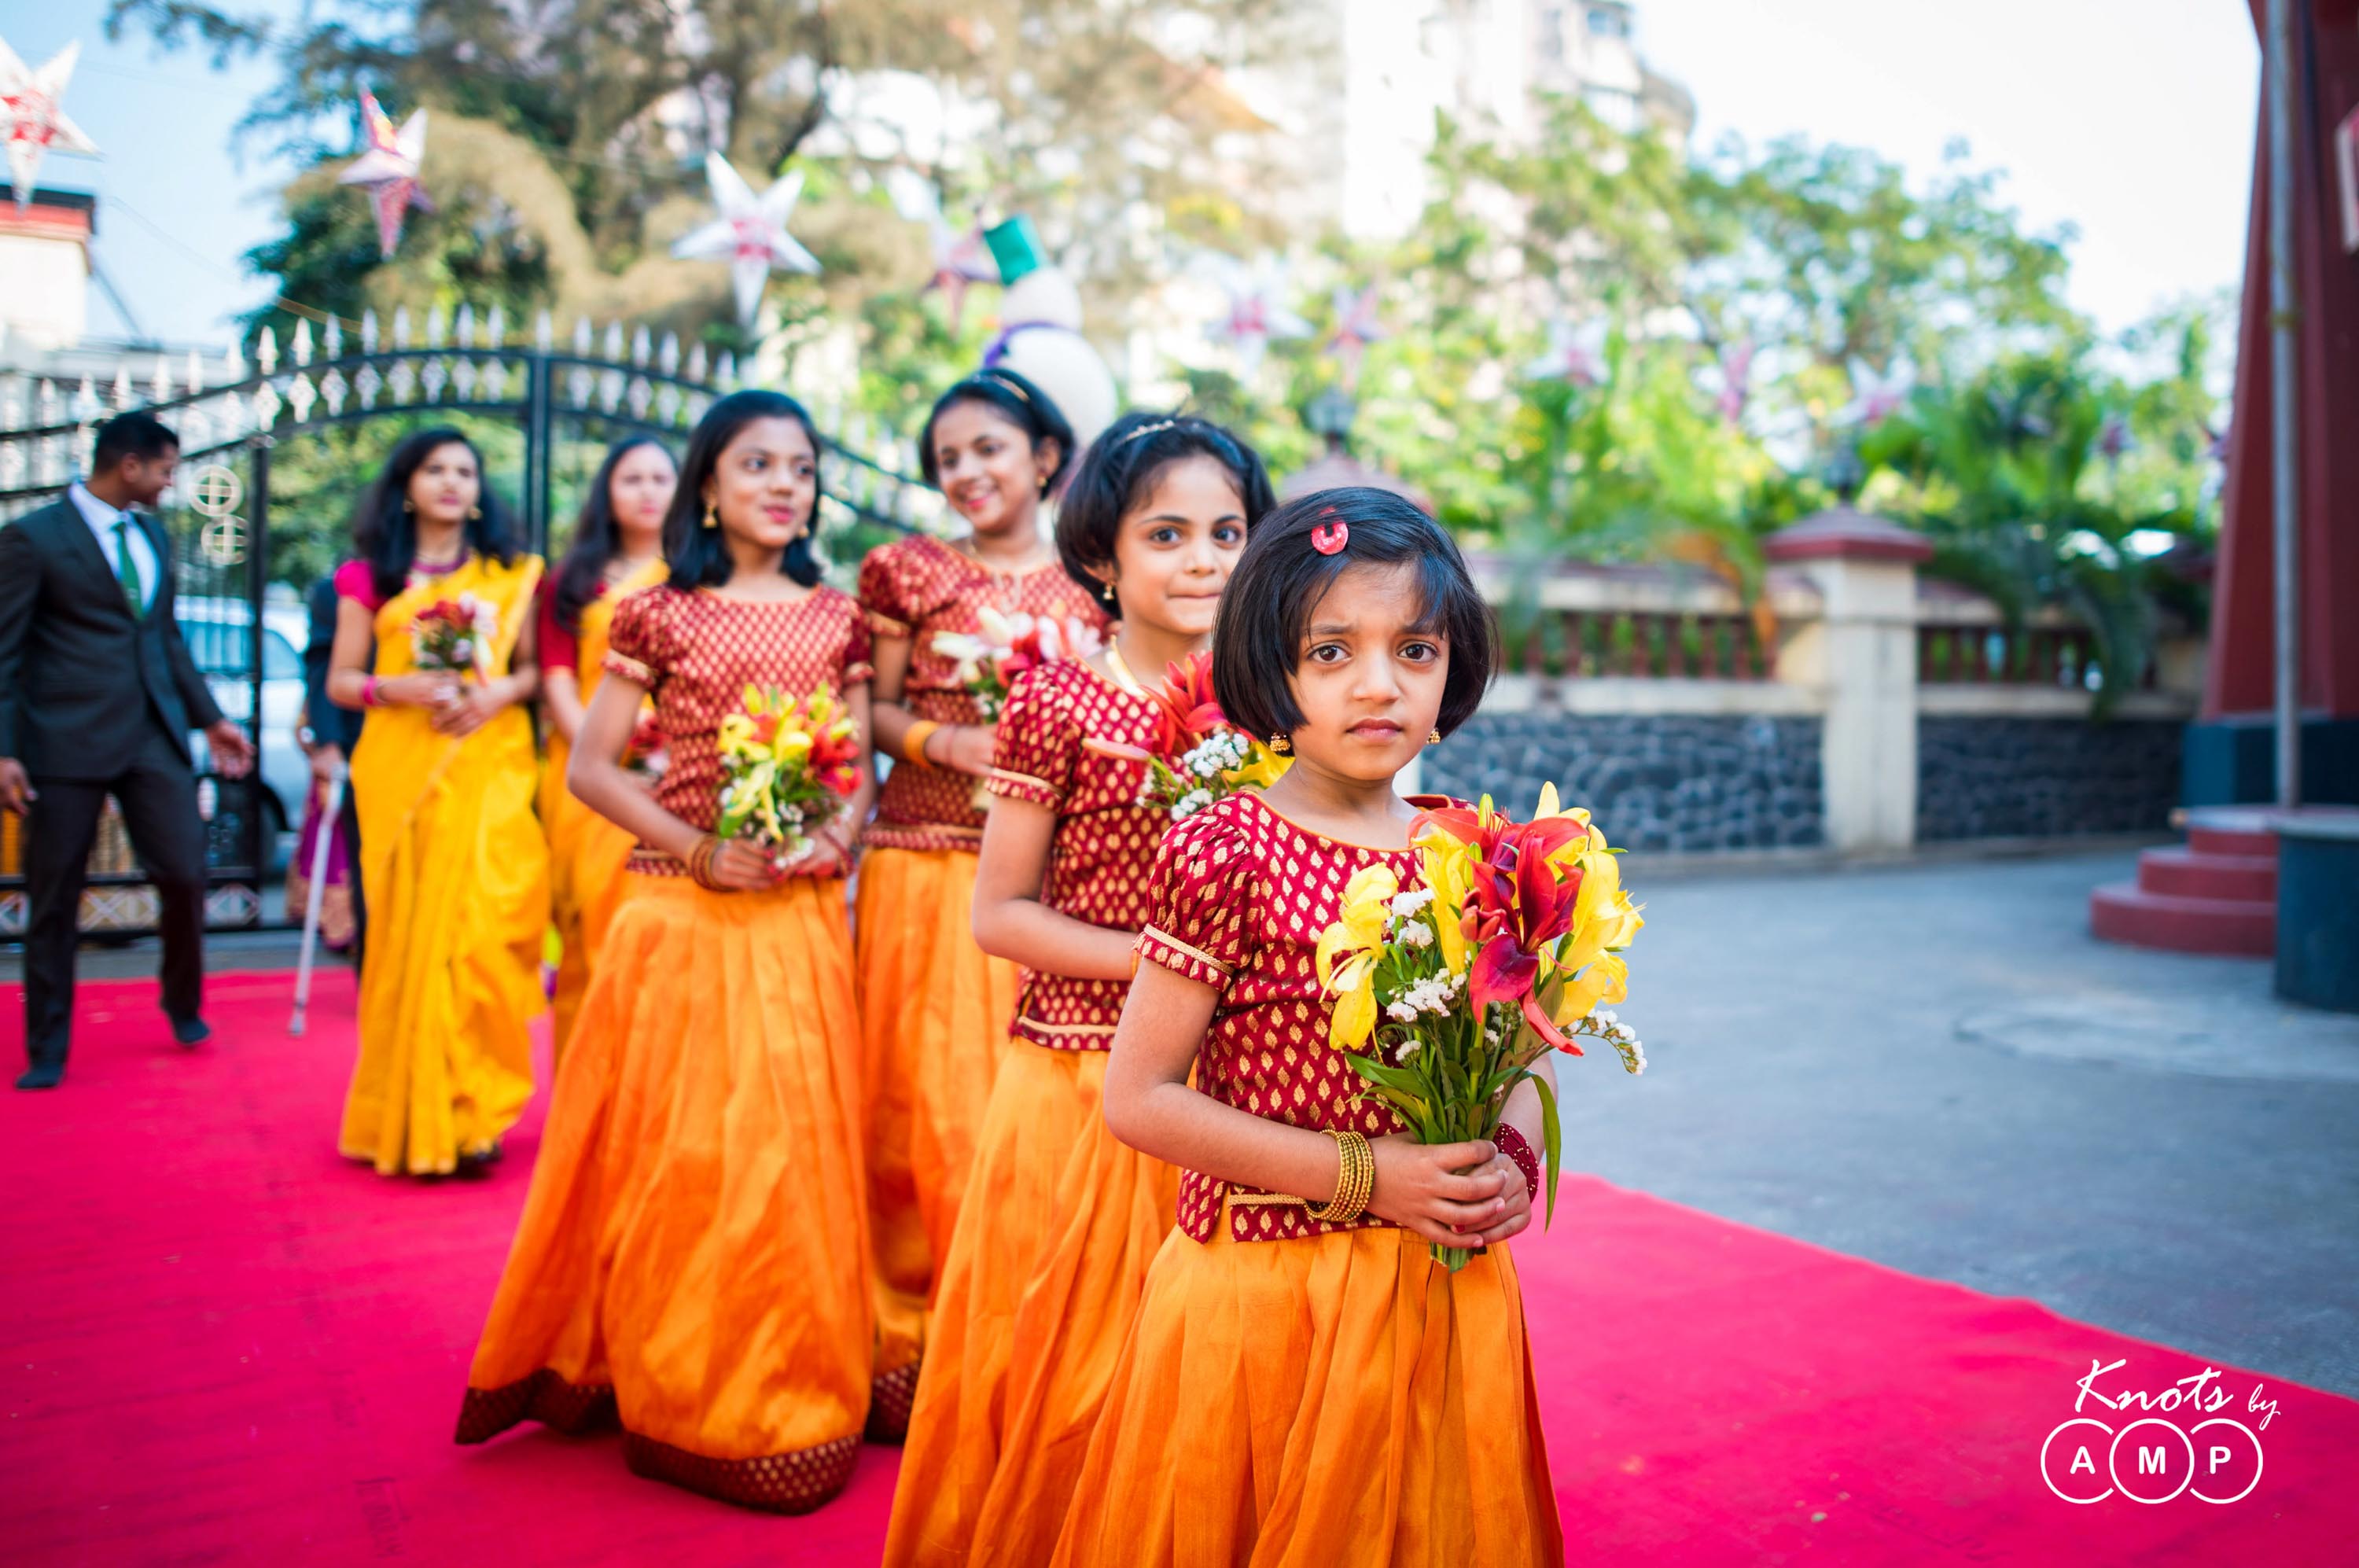 Christian-Malayali-Wedding-in-Navi-Mumbai-27